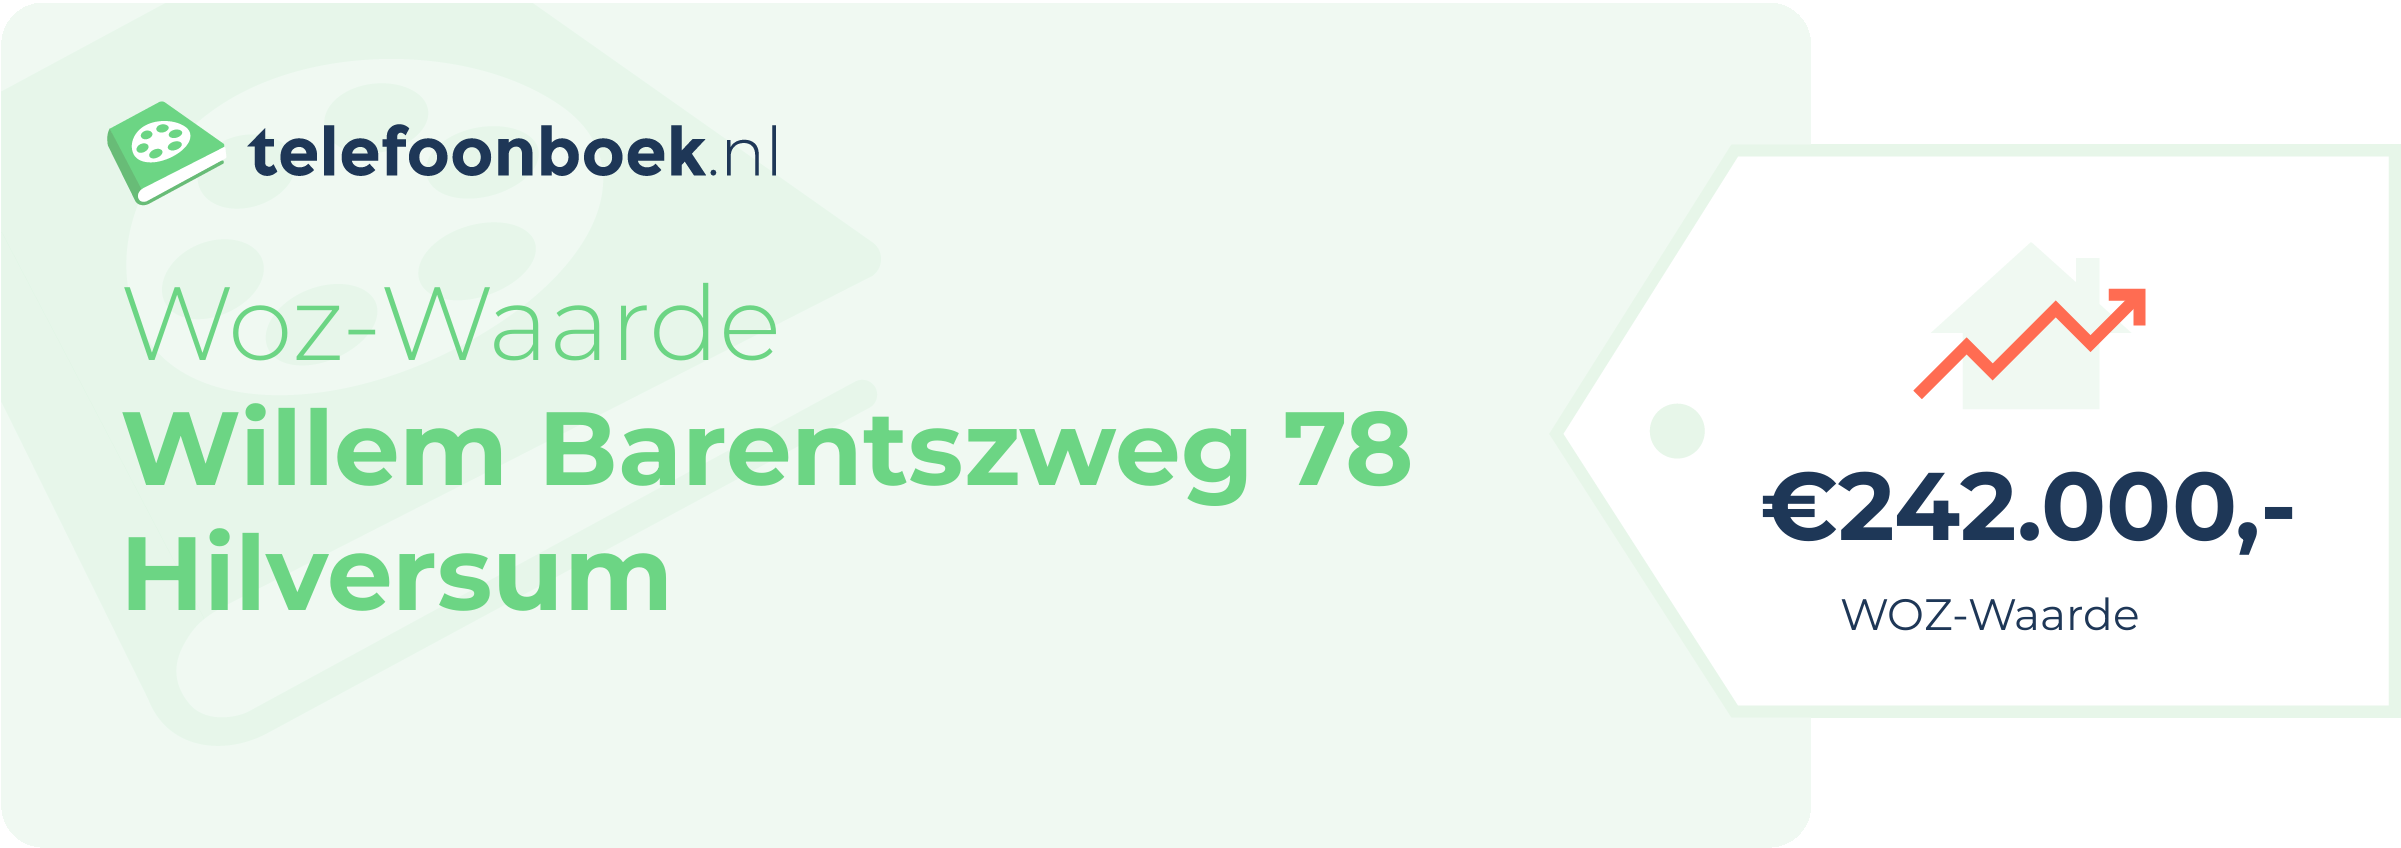 WOZ-waarde Willem Barentszweg 78 Hilversum